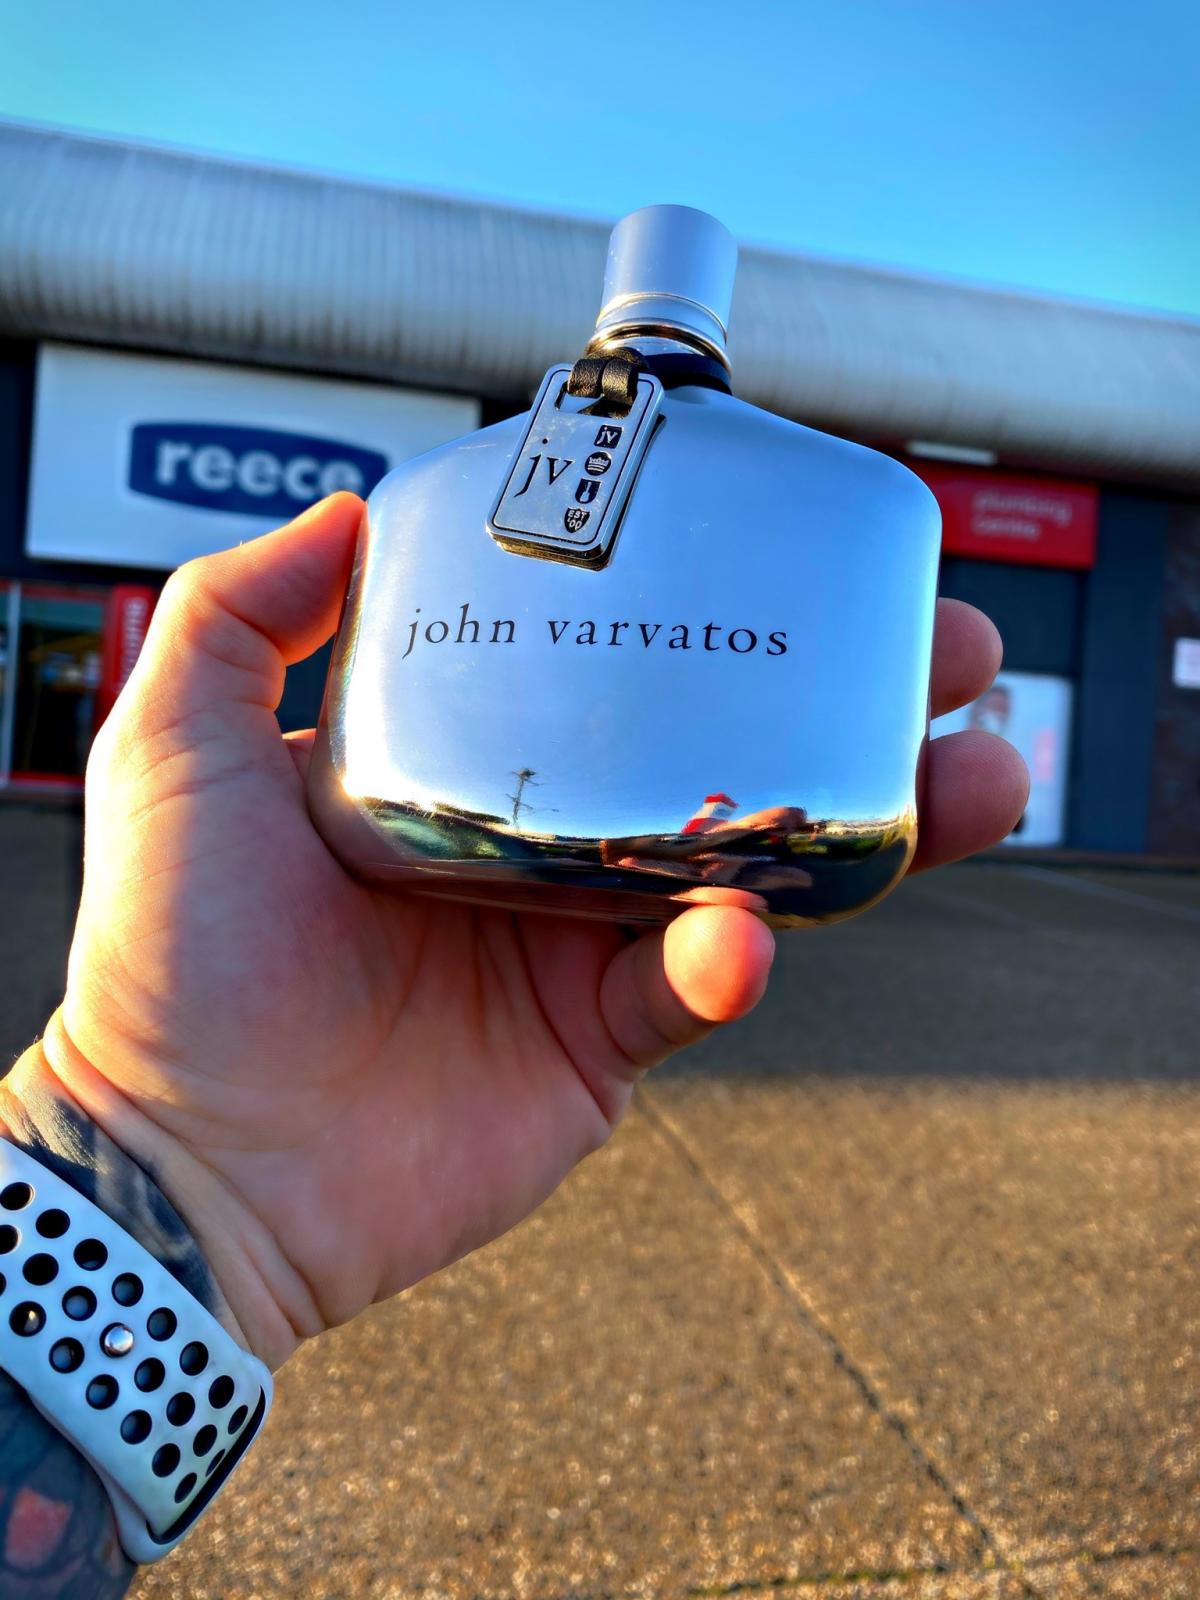 John Varvatos Platinum Edition John Varvatos cologne - a fragrance for ...